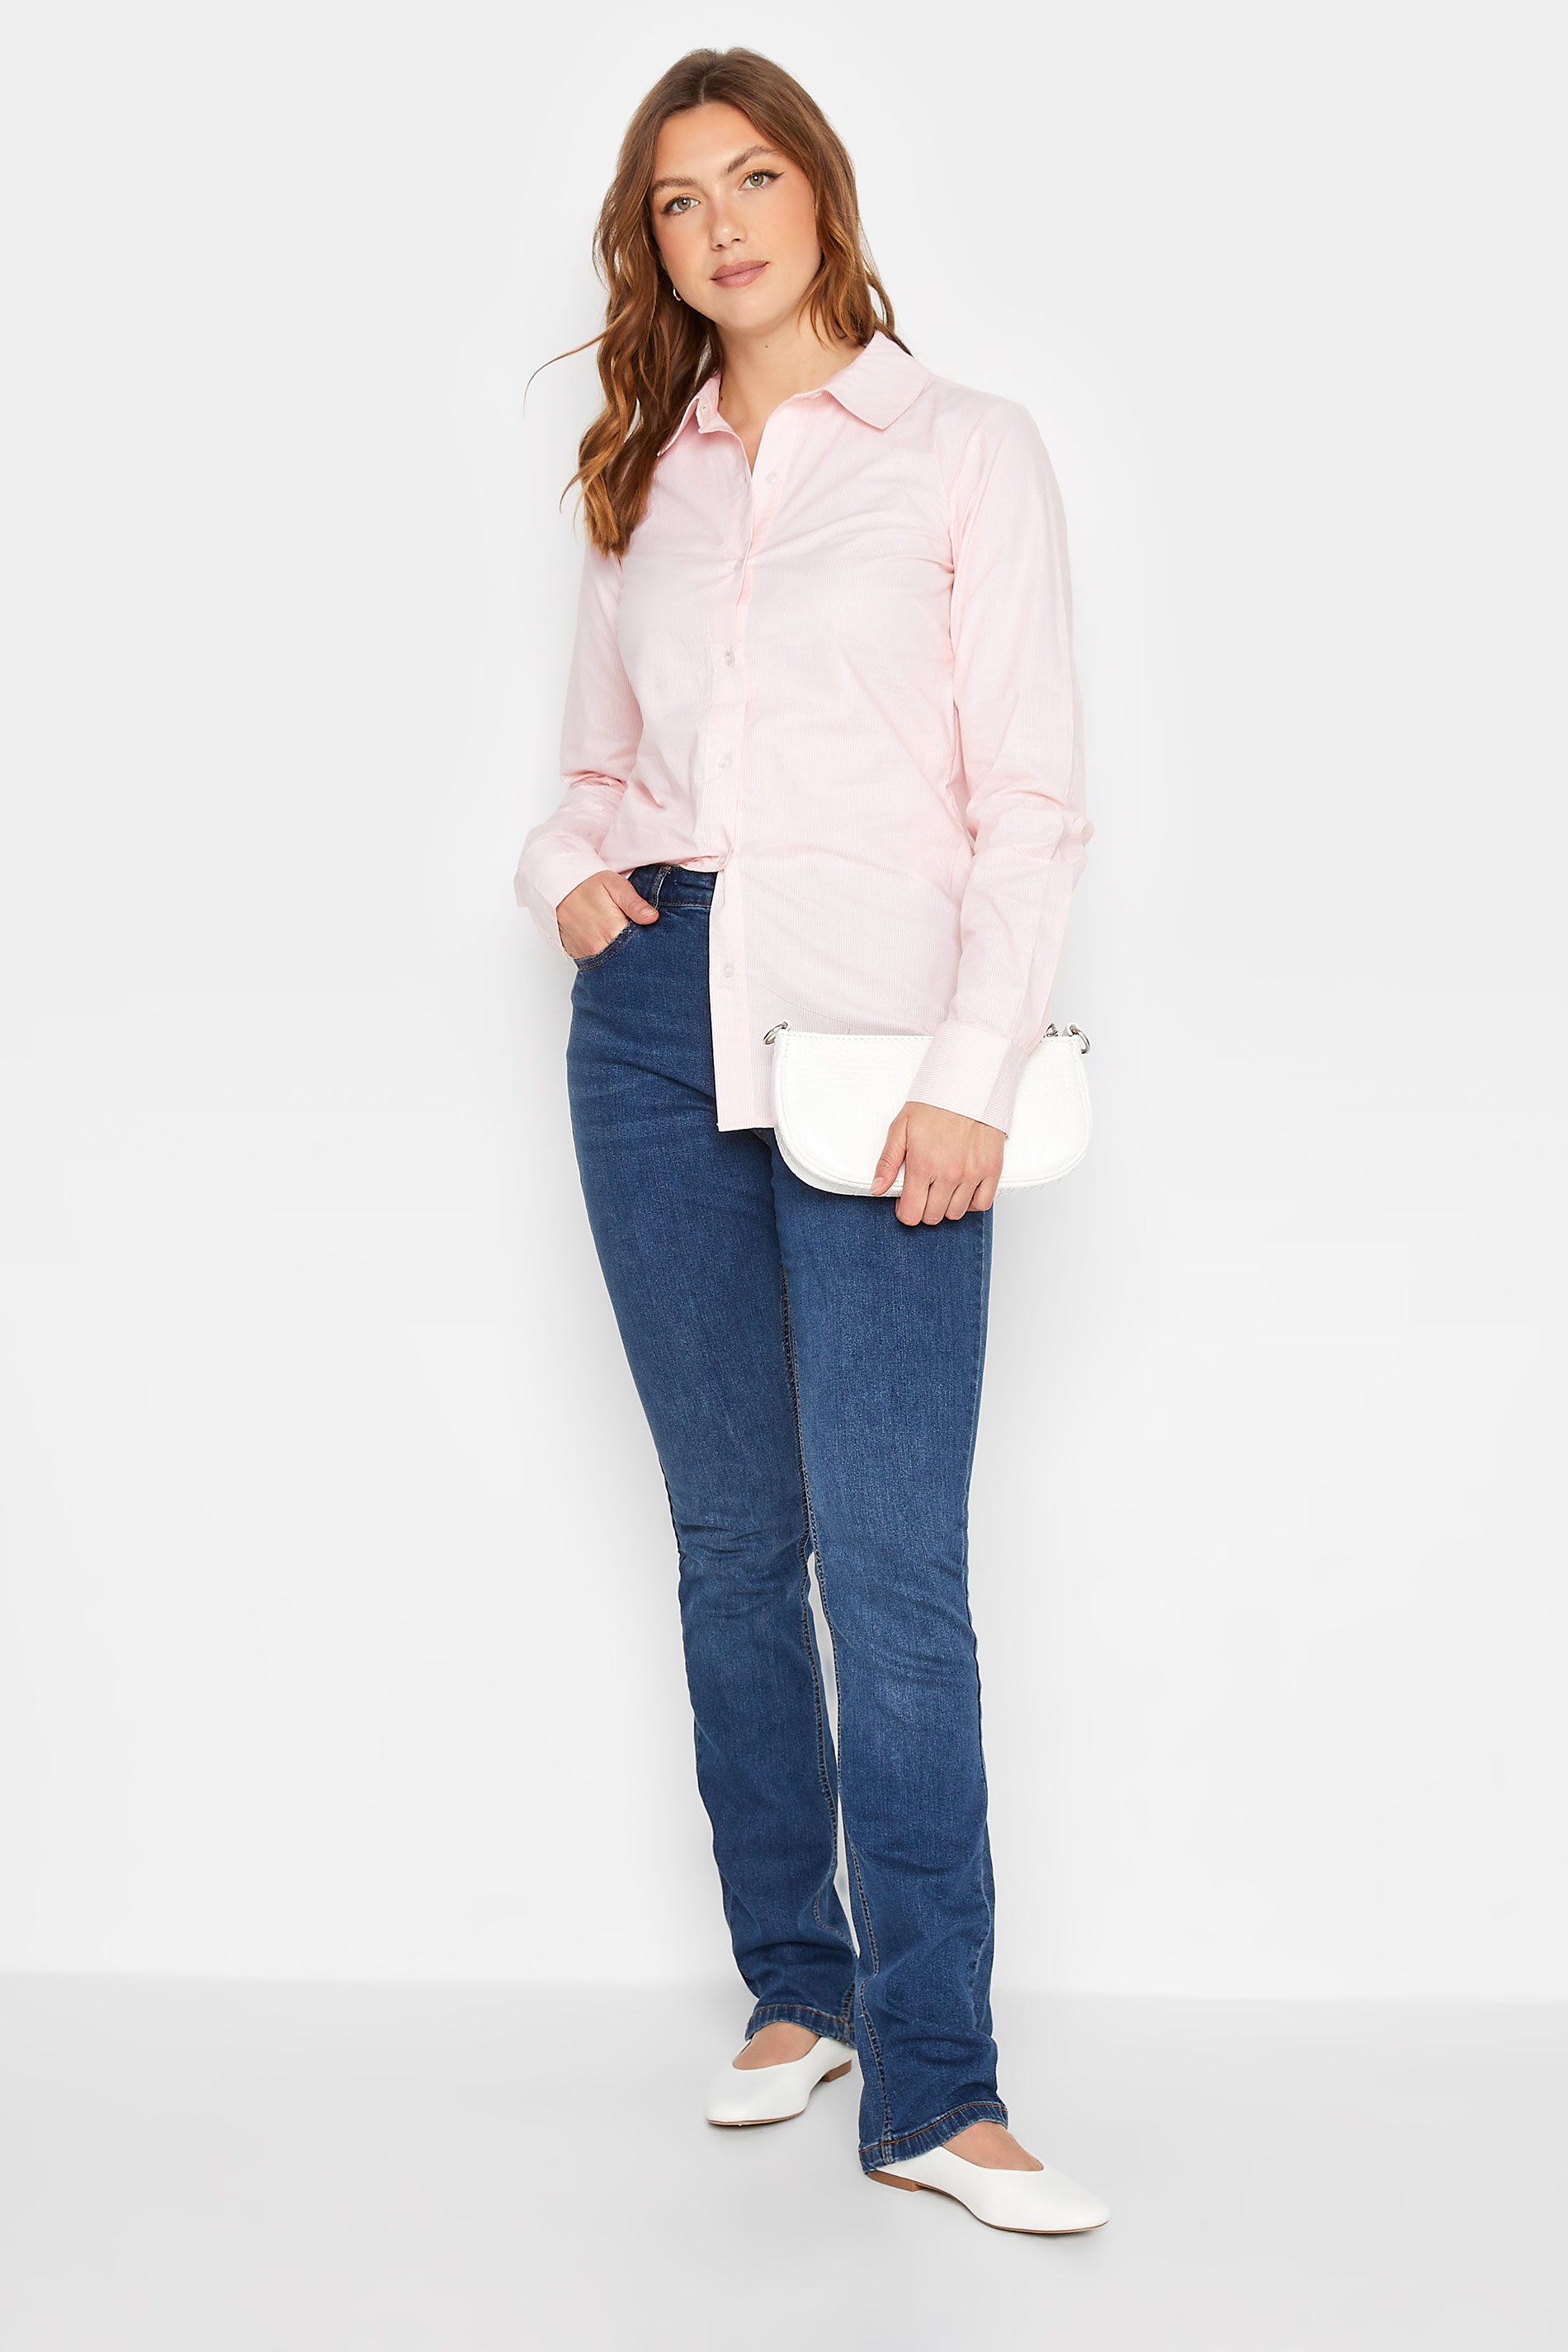 LTS Tall Women's Pink Stripe Fitted Shirt | Long Tall Sally 3